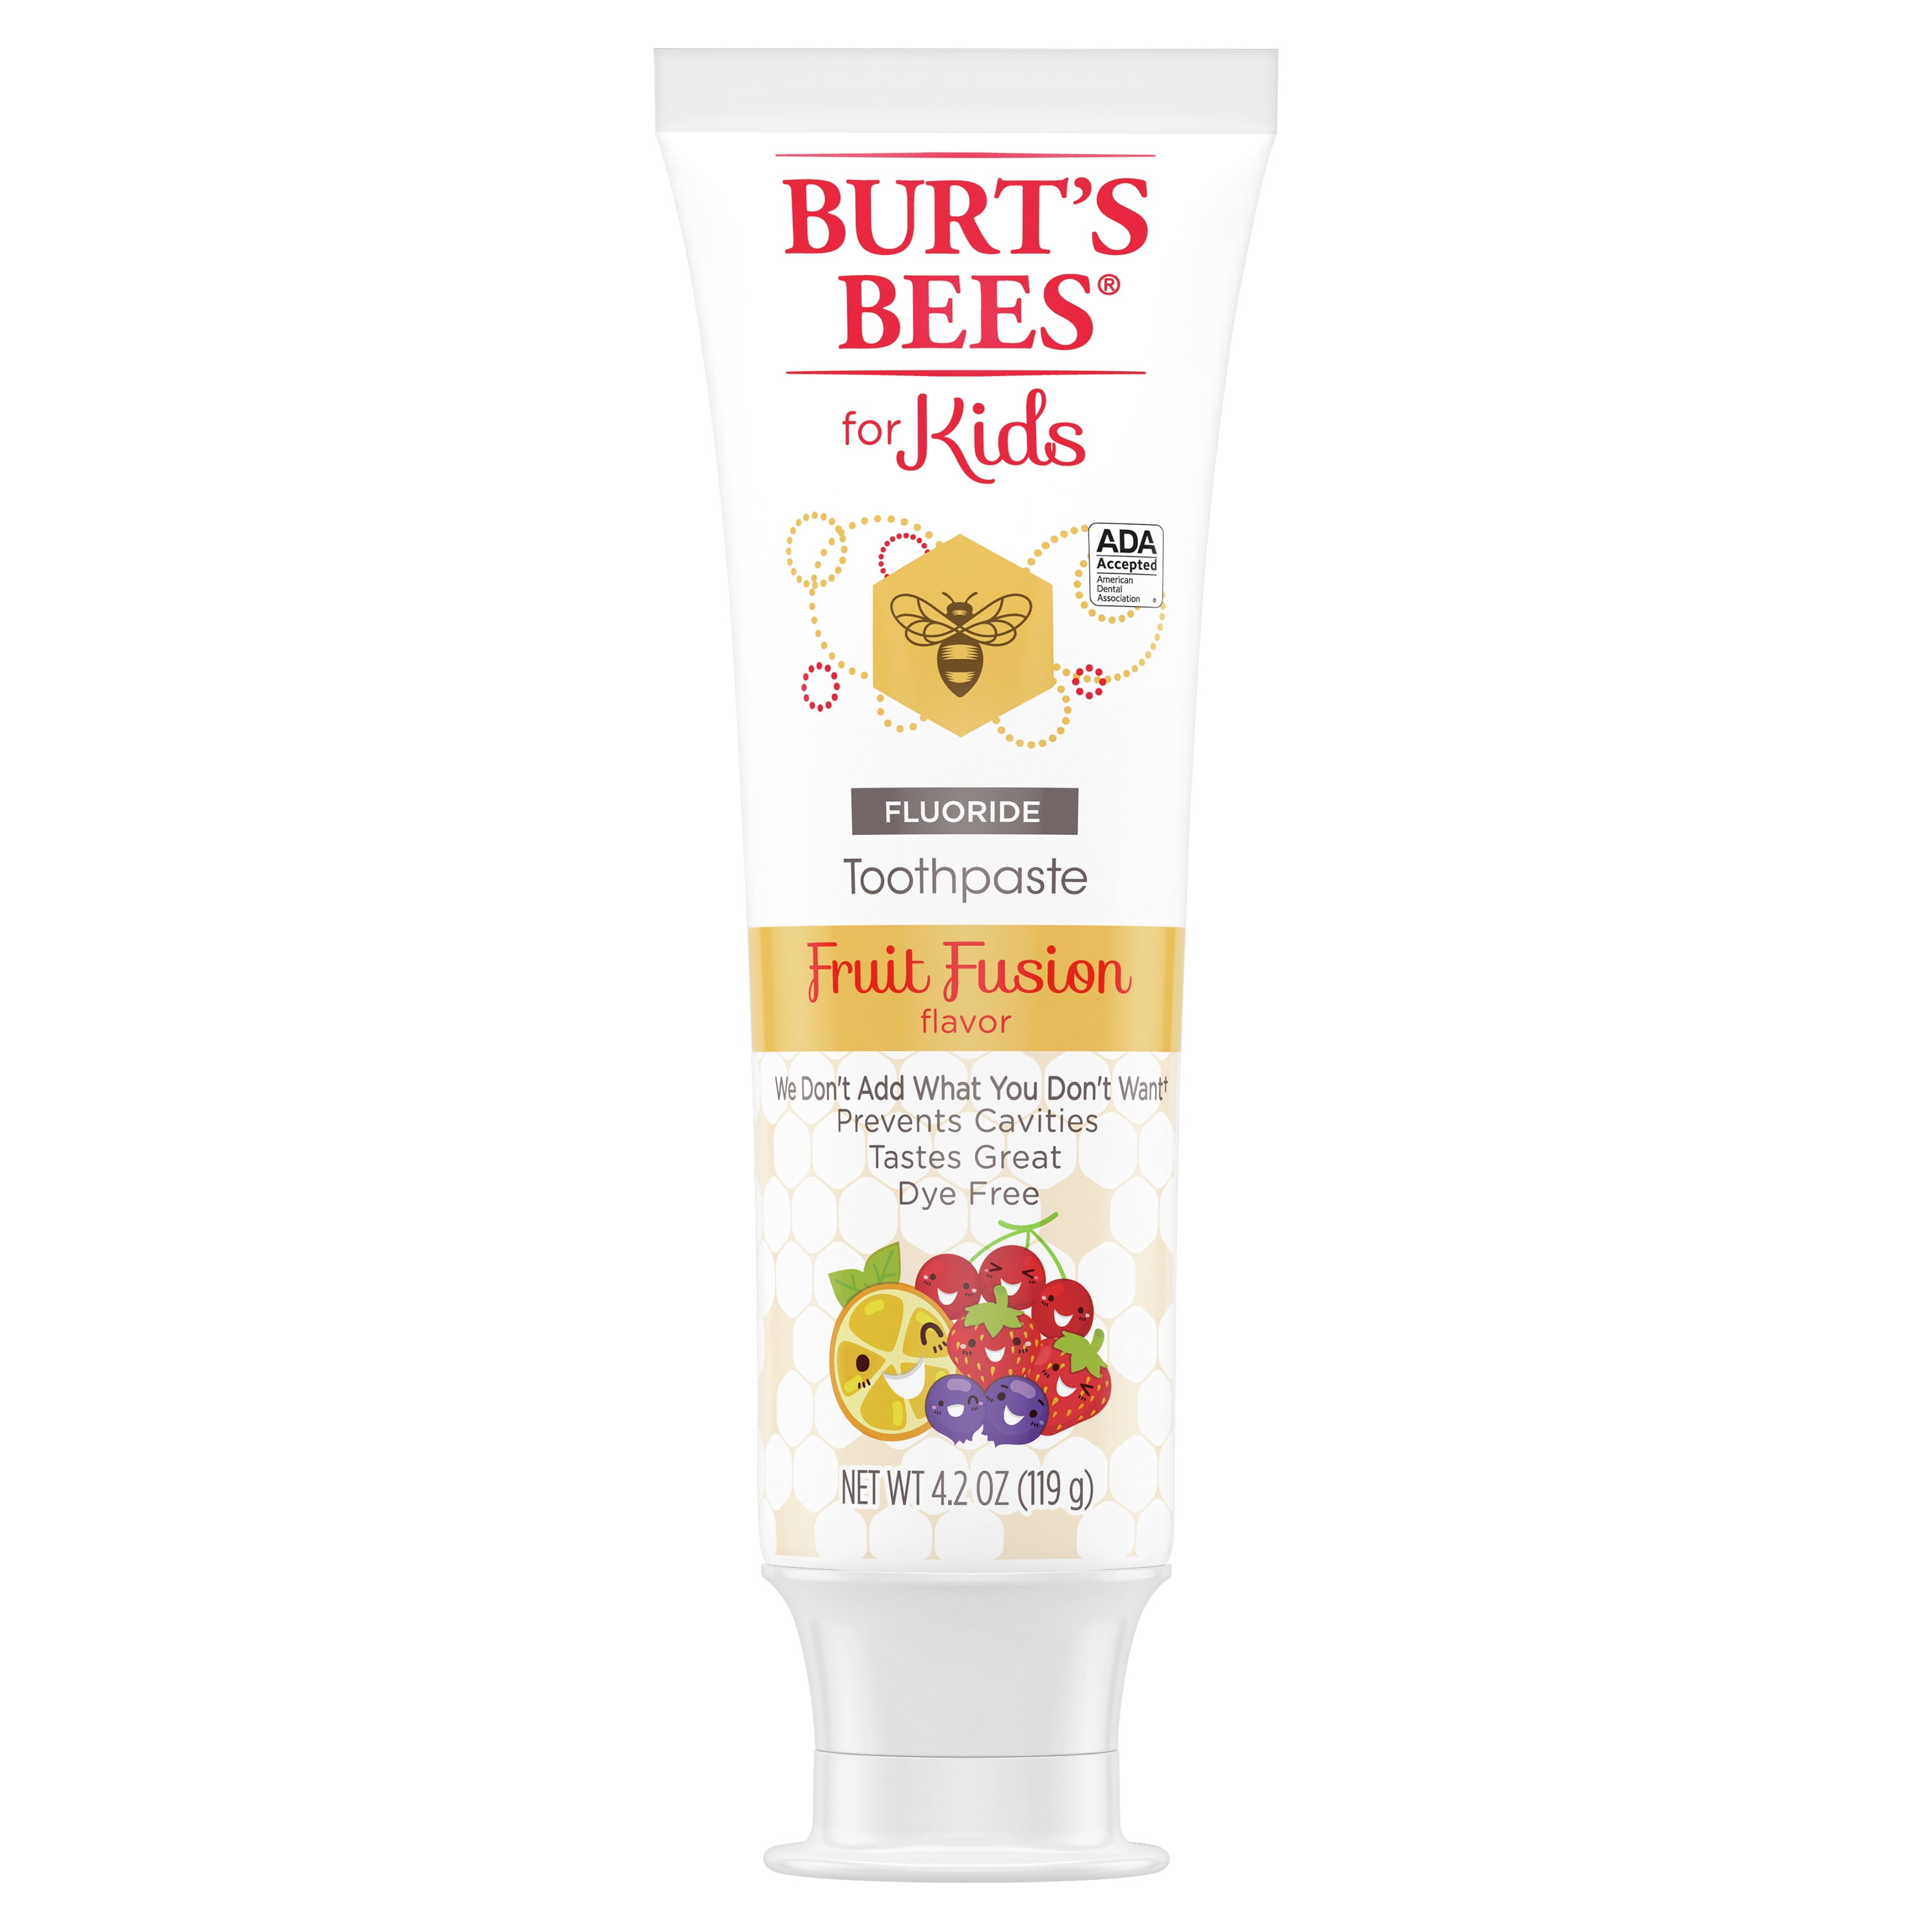 Burt's Bees Kids Toothpaste with Fluoride, Fruit Fusion, 4.2 oz